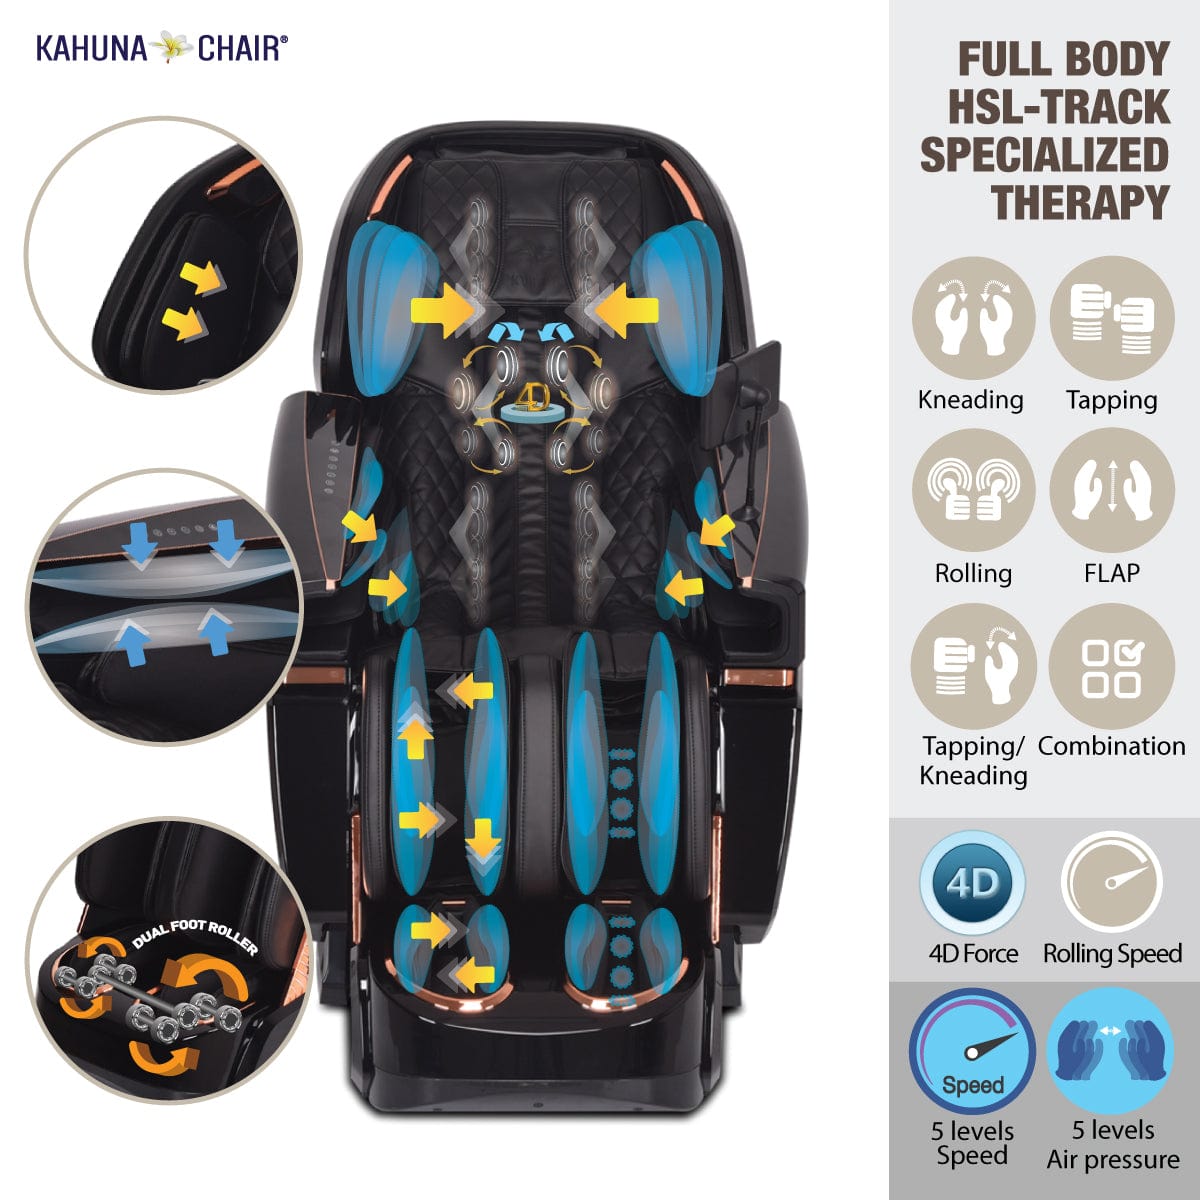 Kahuna Chair – EM 8500 [Black] - Massage Chair